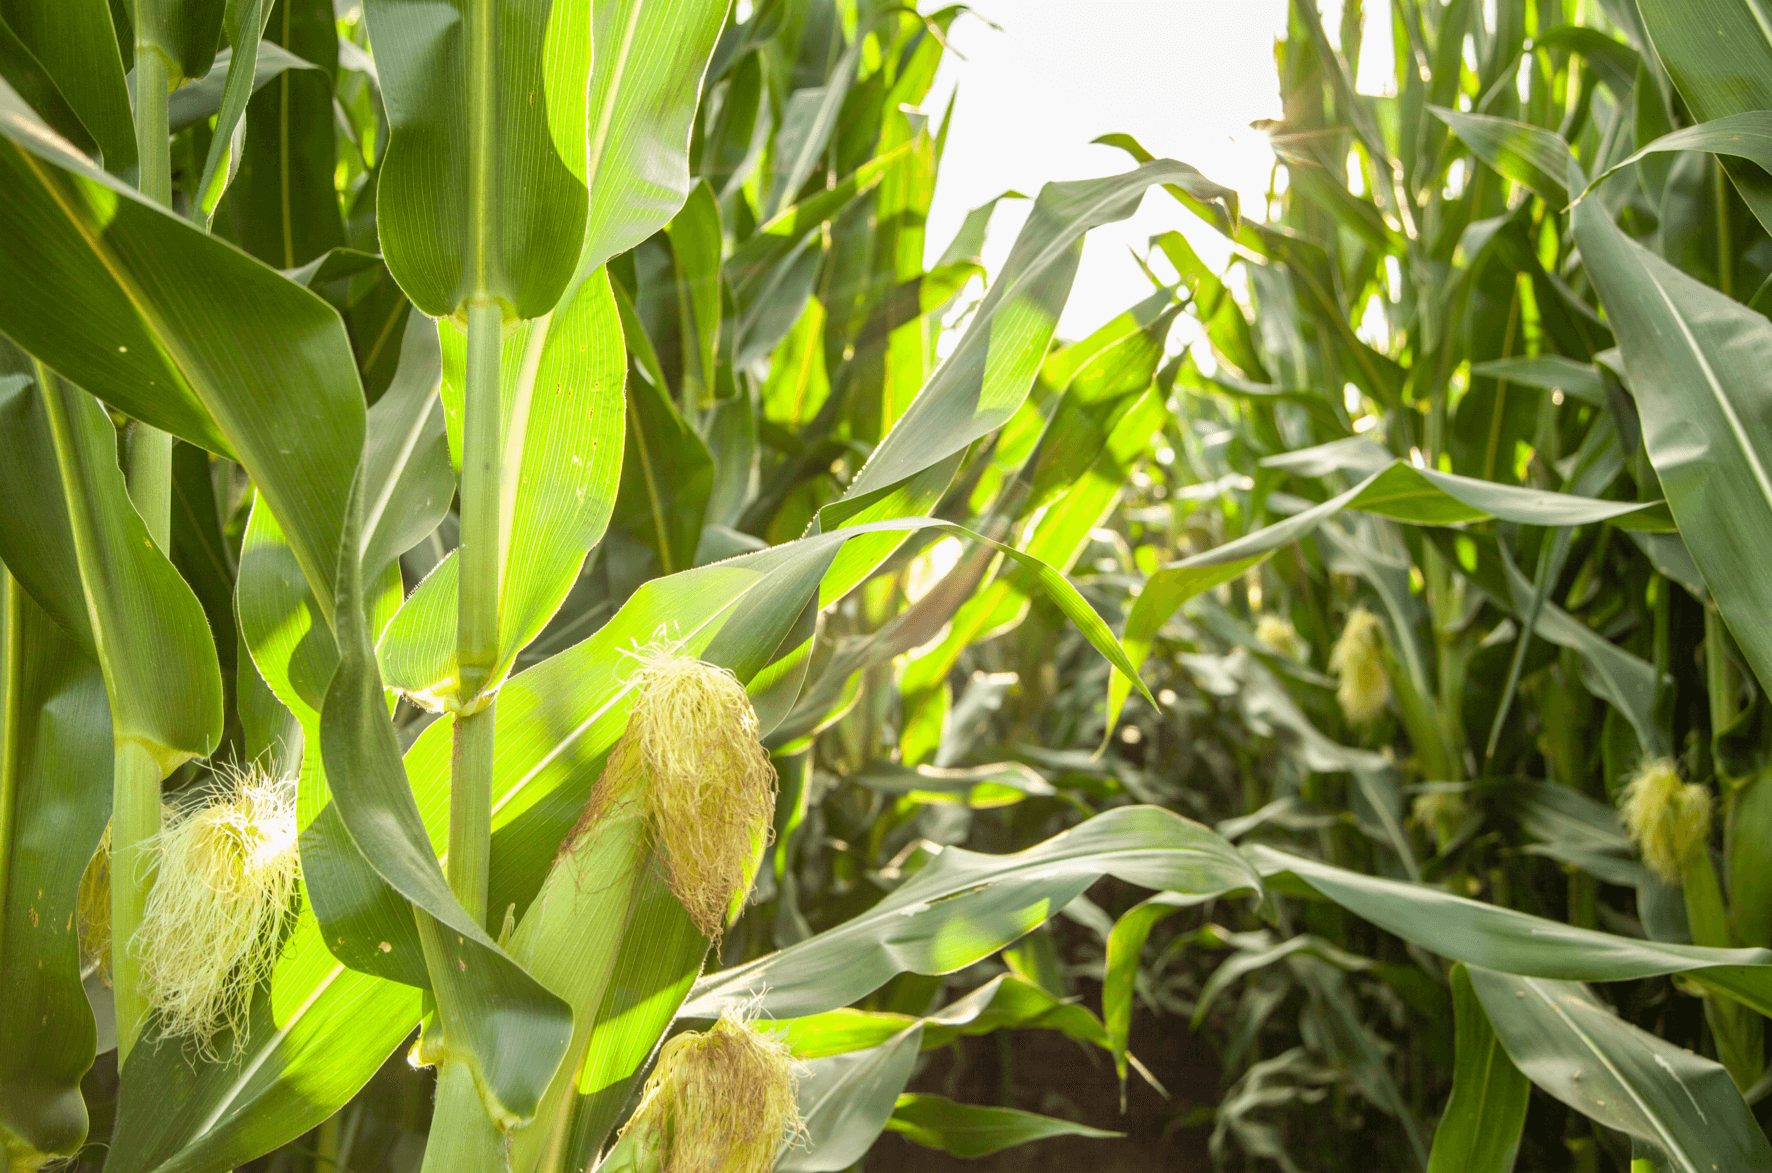 Corn Field macro level shot